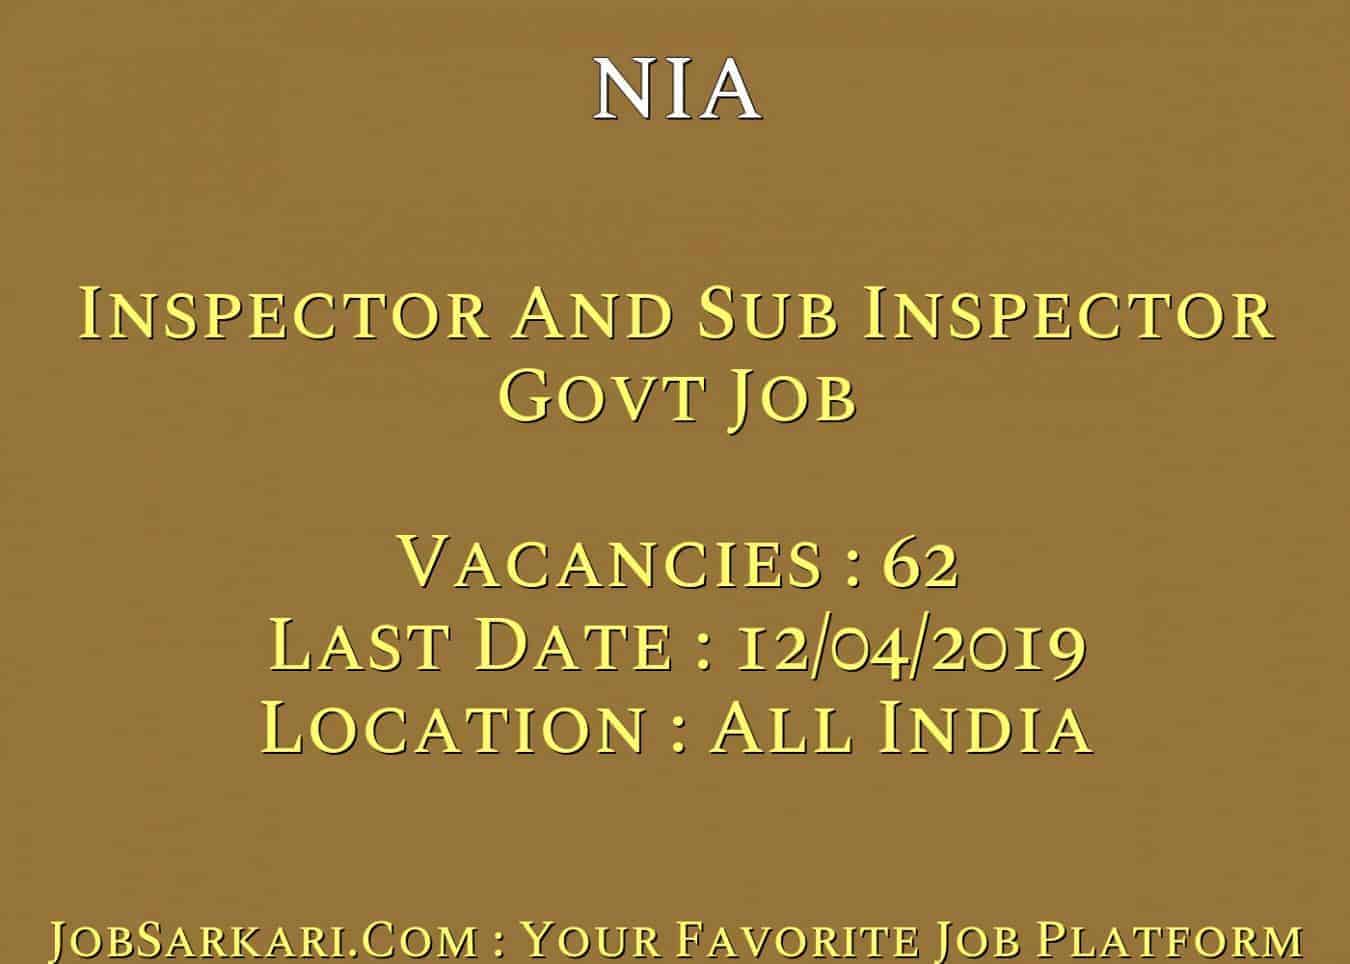 NIA Recruitment 2019 For Inspector And Sub Inspector Govt Job